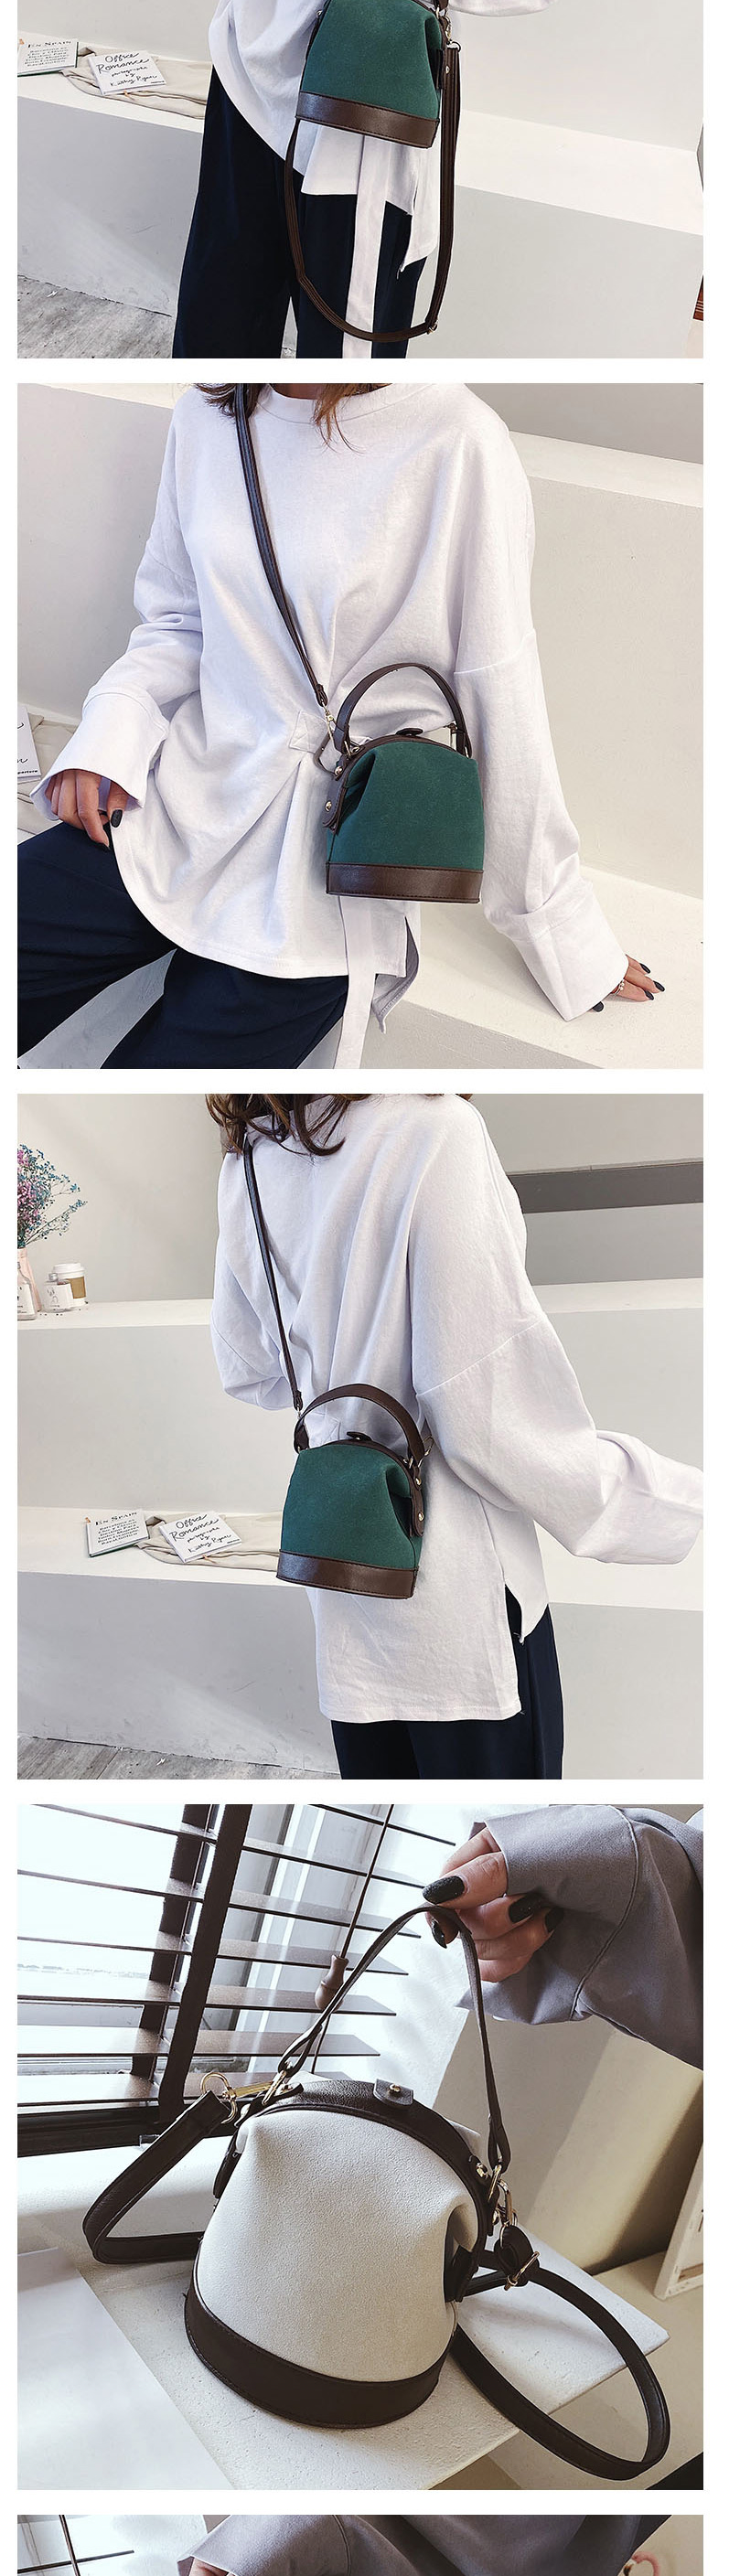 Fashion Green Frosted Contrast Panel Handbag,Handbags